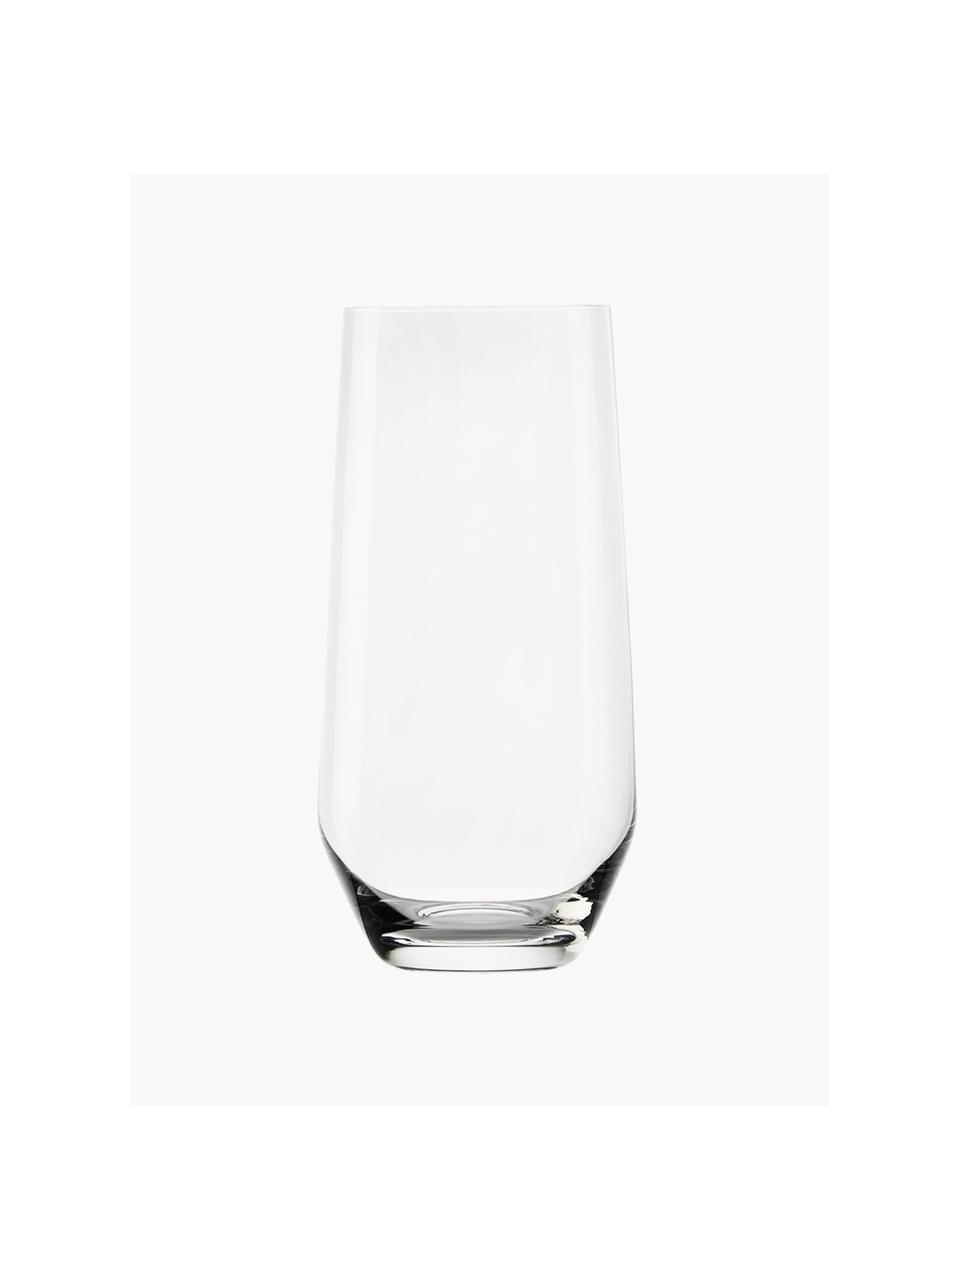 Vasos highball de cristal Revolution, 6 uds., Cristal, Transparente, Ø 7 x Al 14 cm, 360 ml